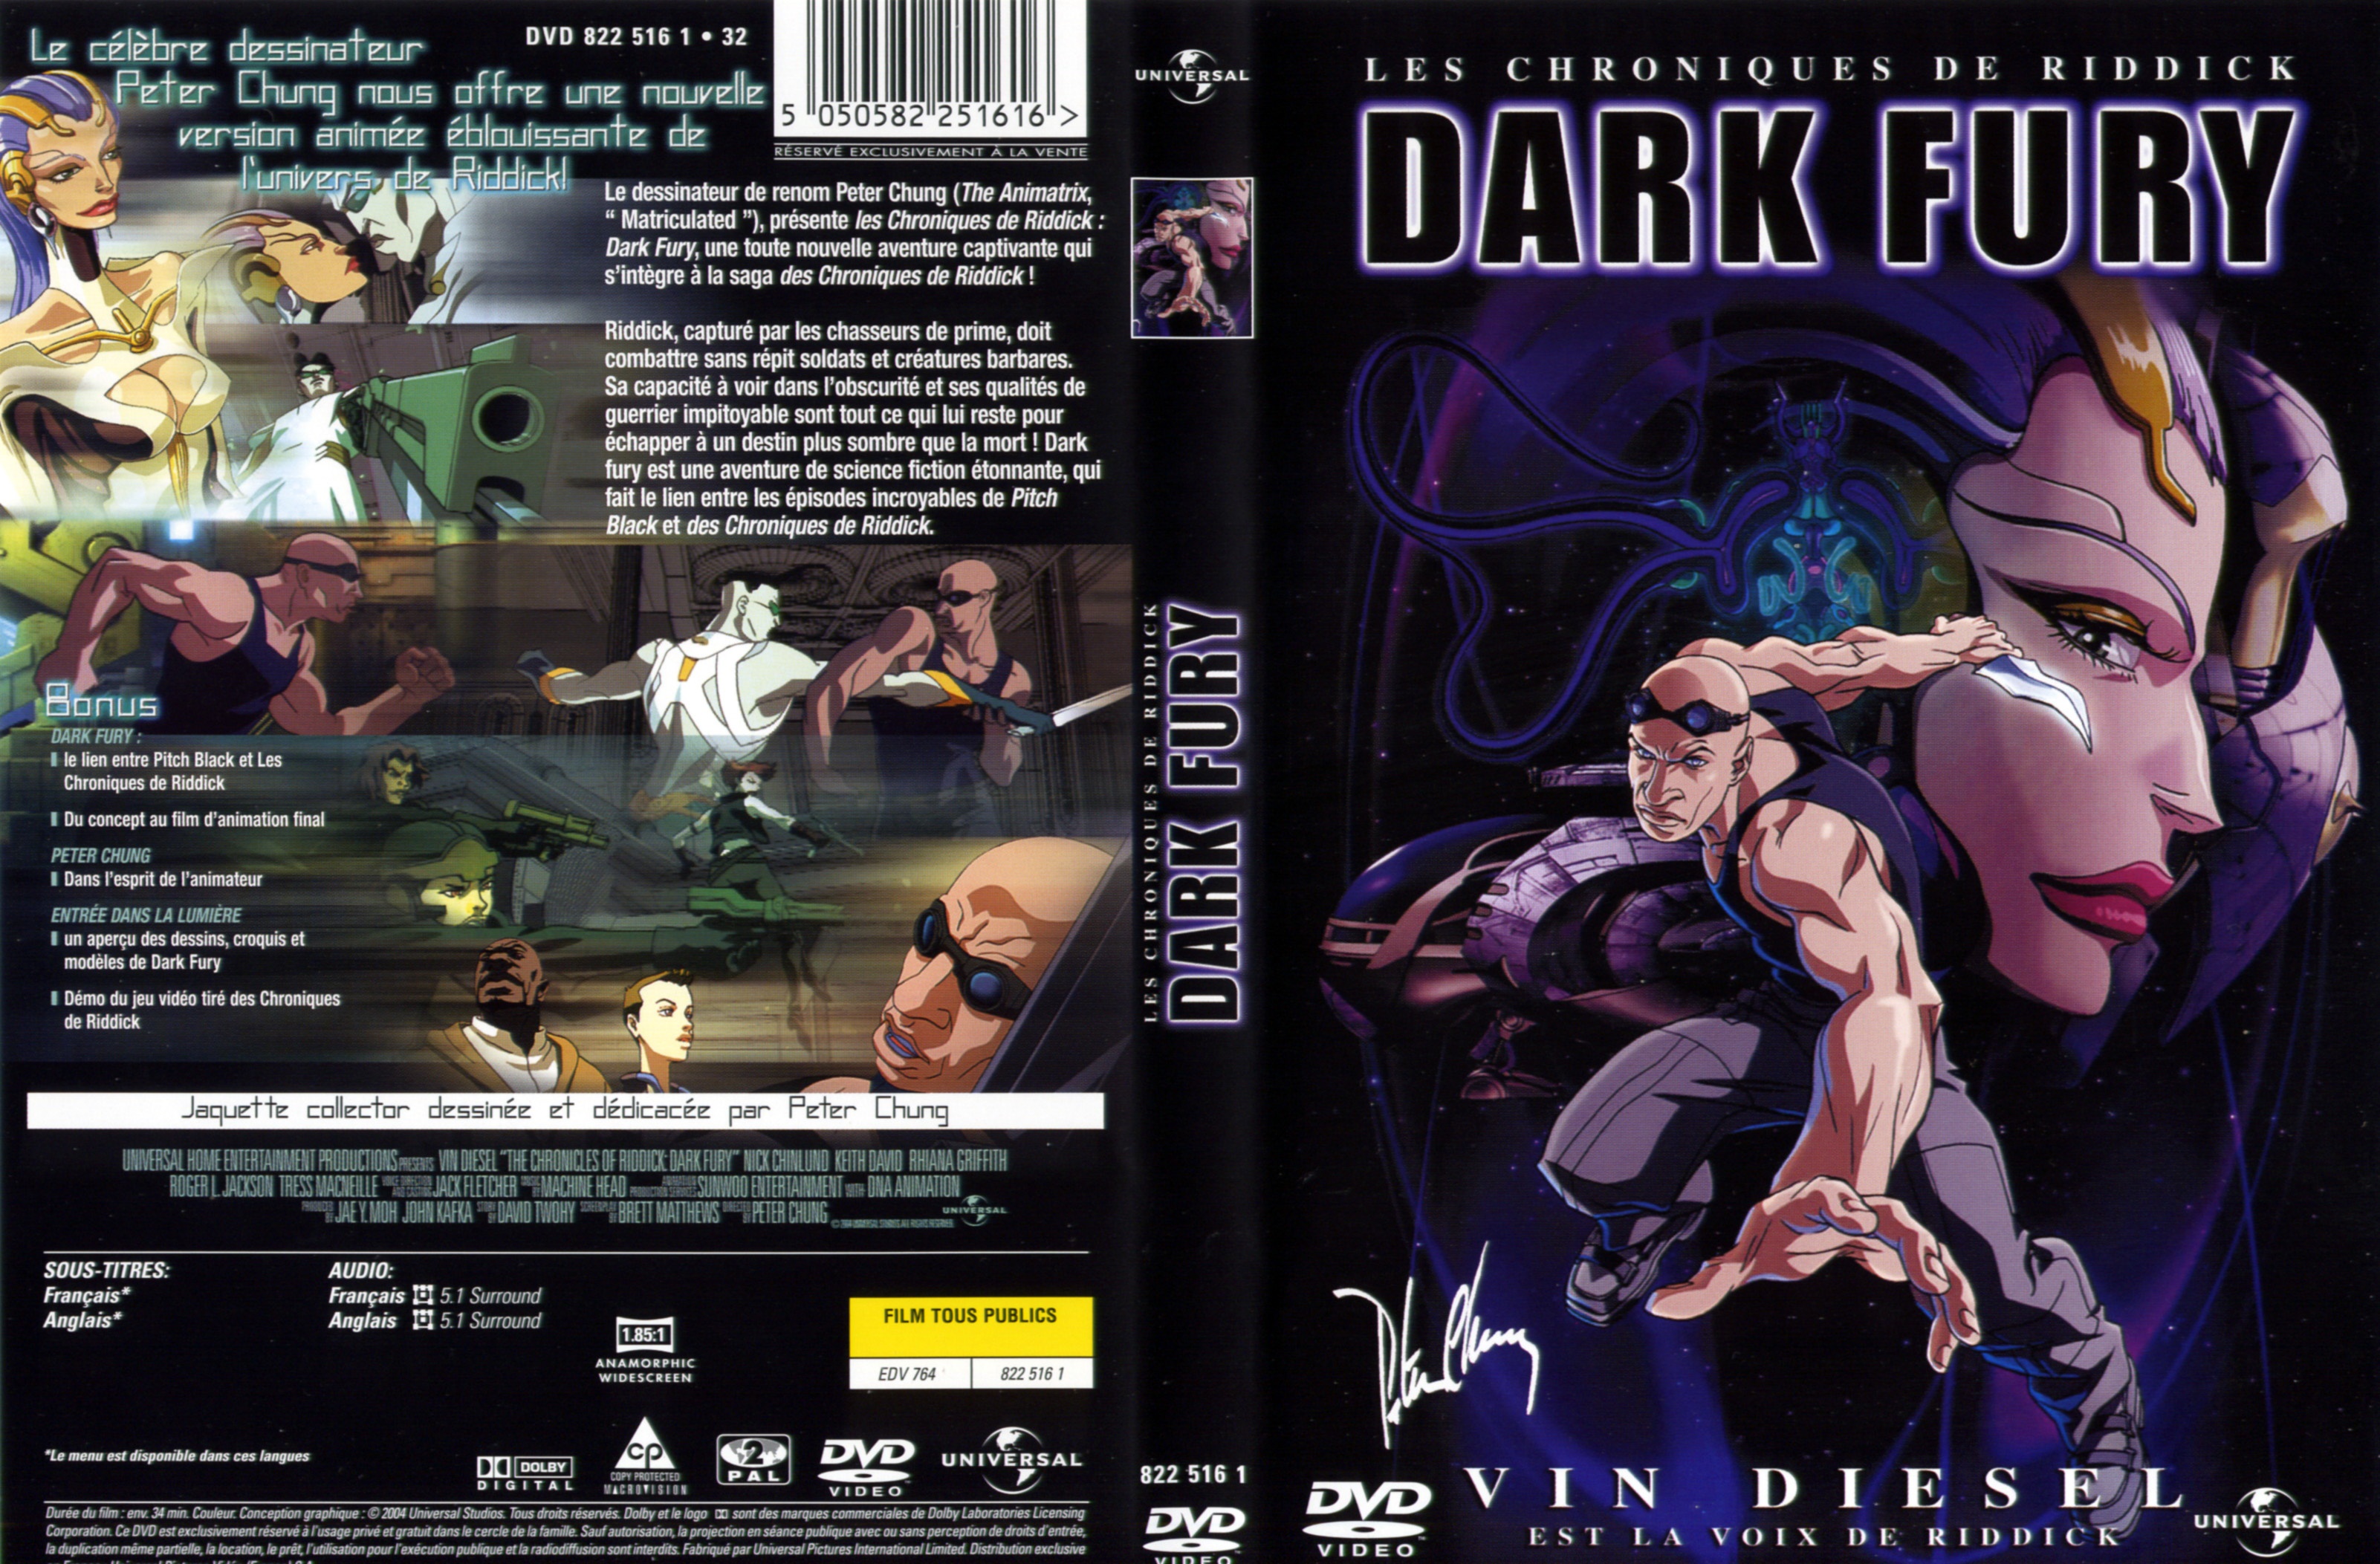 Jaquette DVD Les chroniques de Riddick Dark Fury